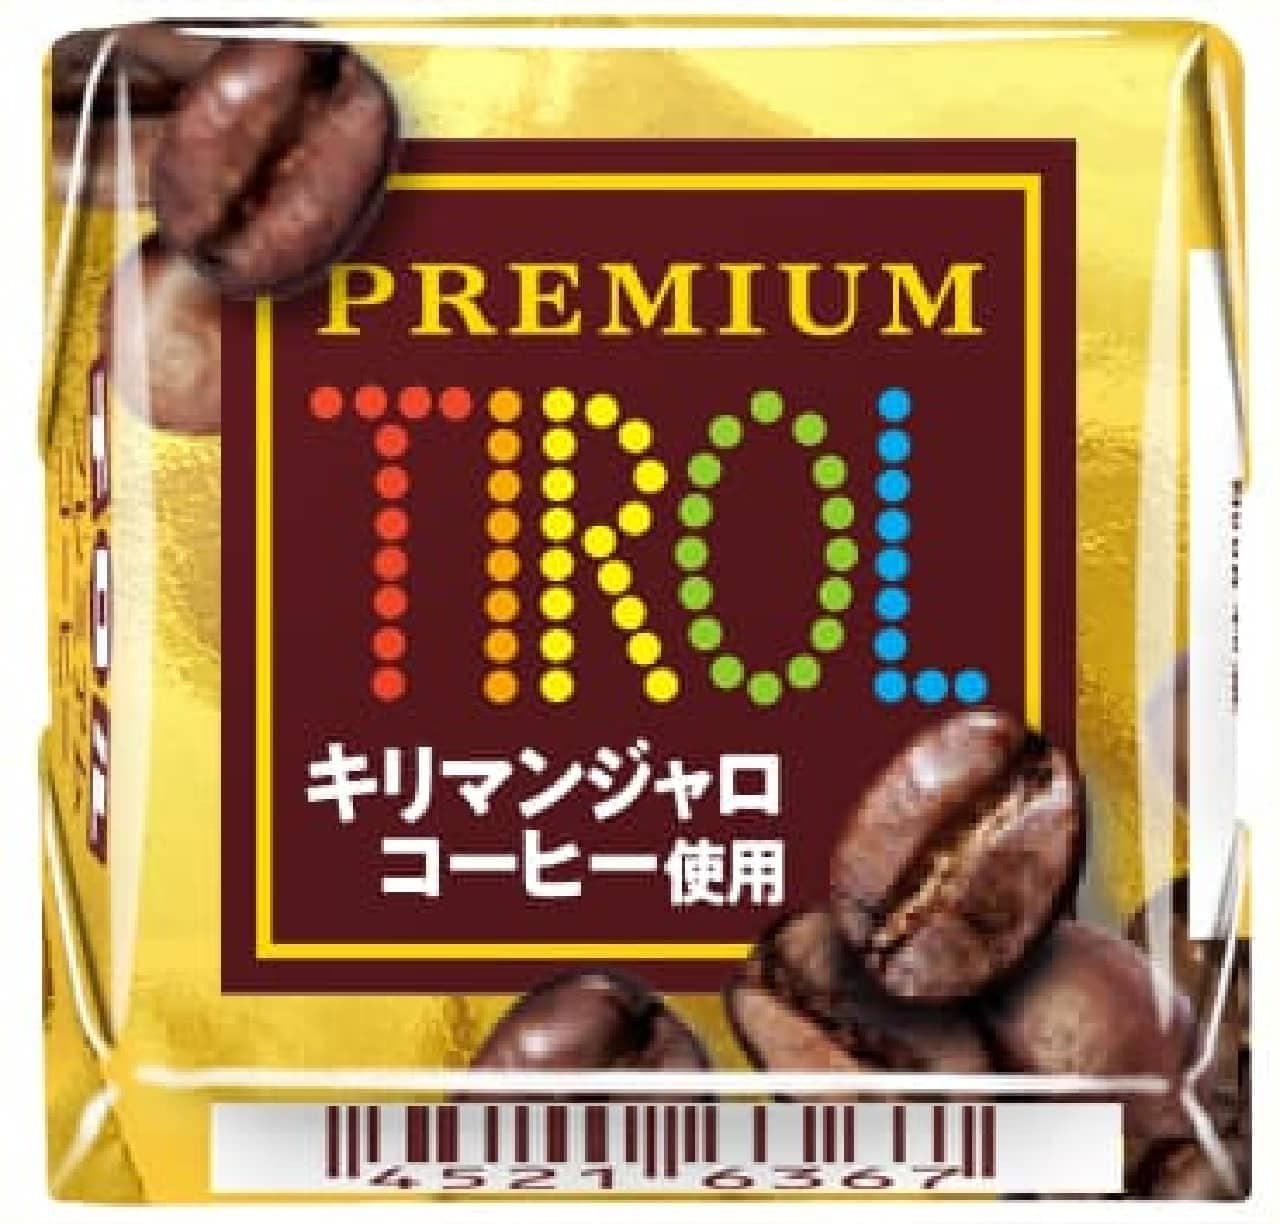 7-ELEVEN "Tirol Choco [Premium Coffee]"